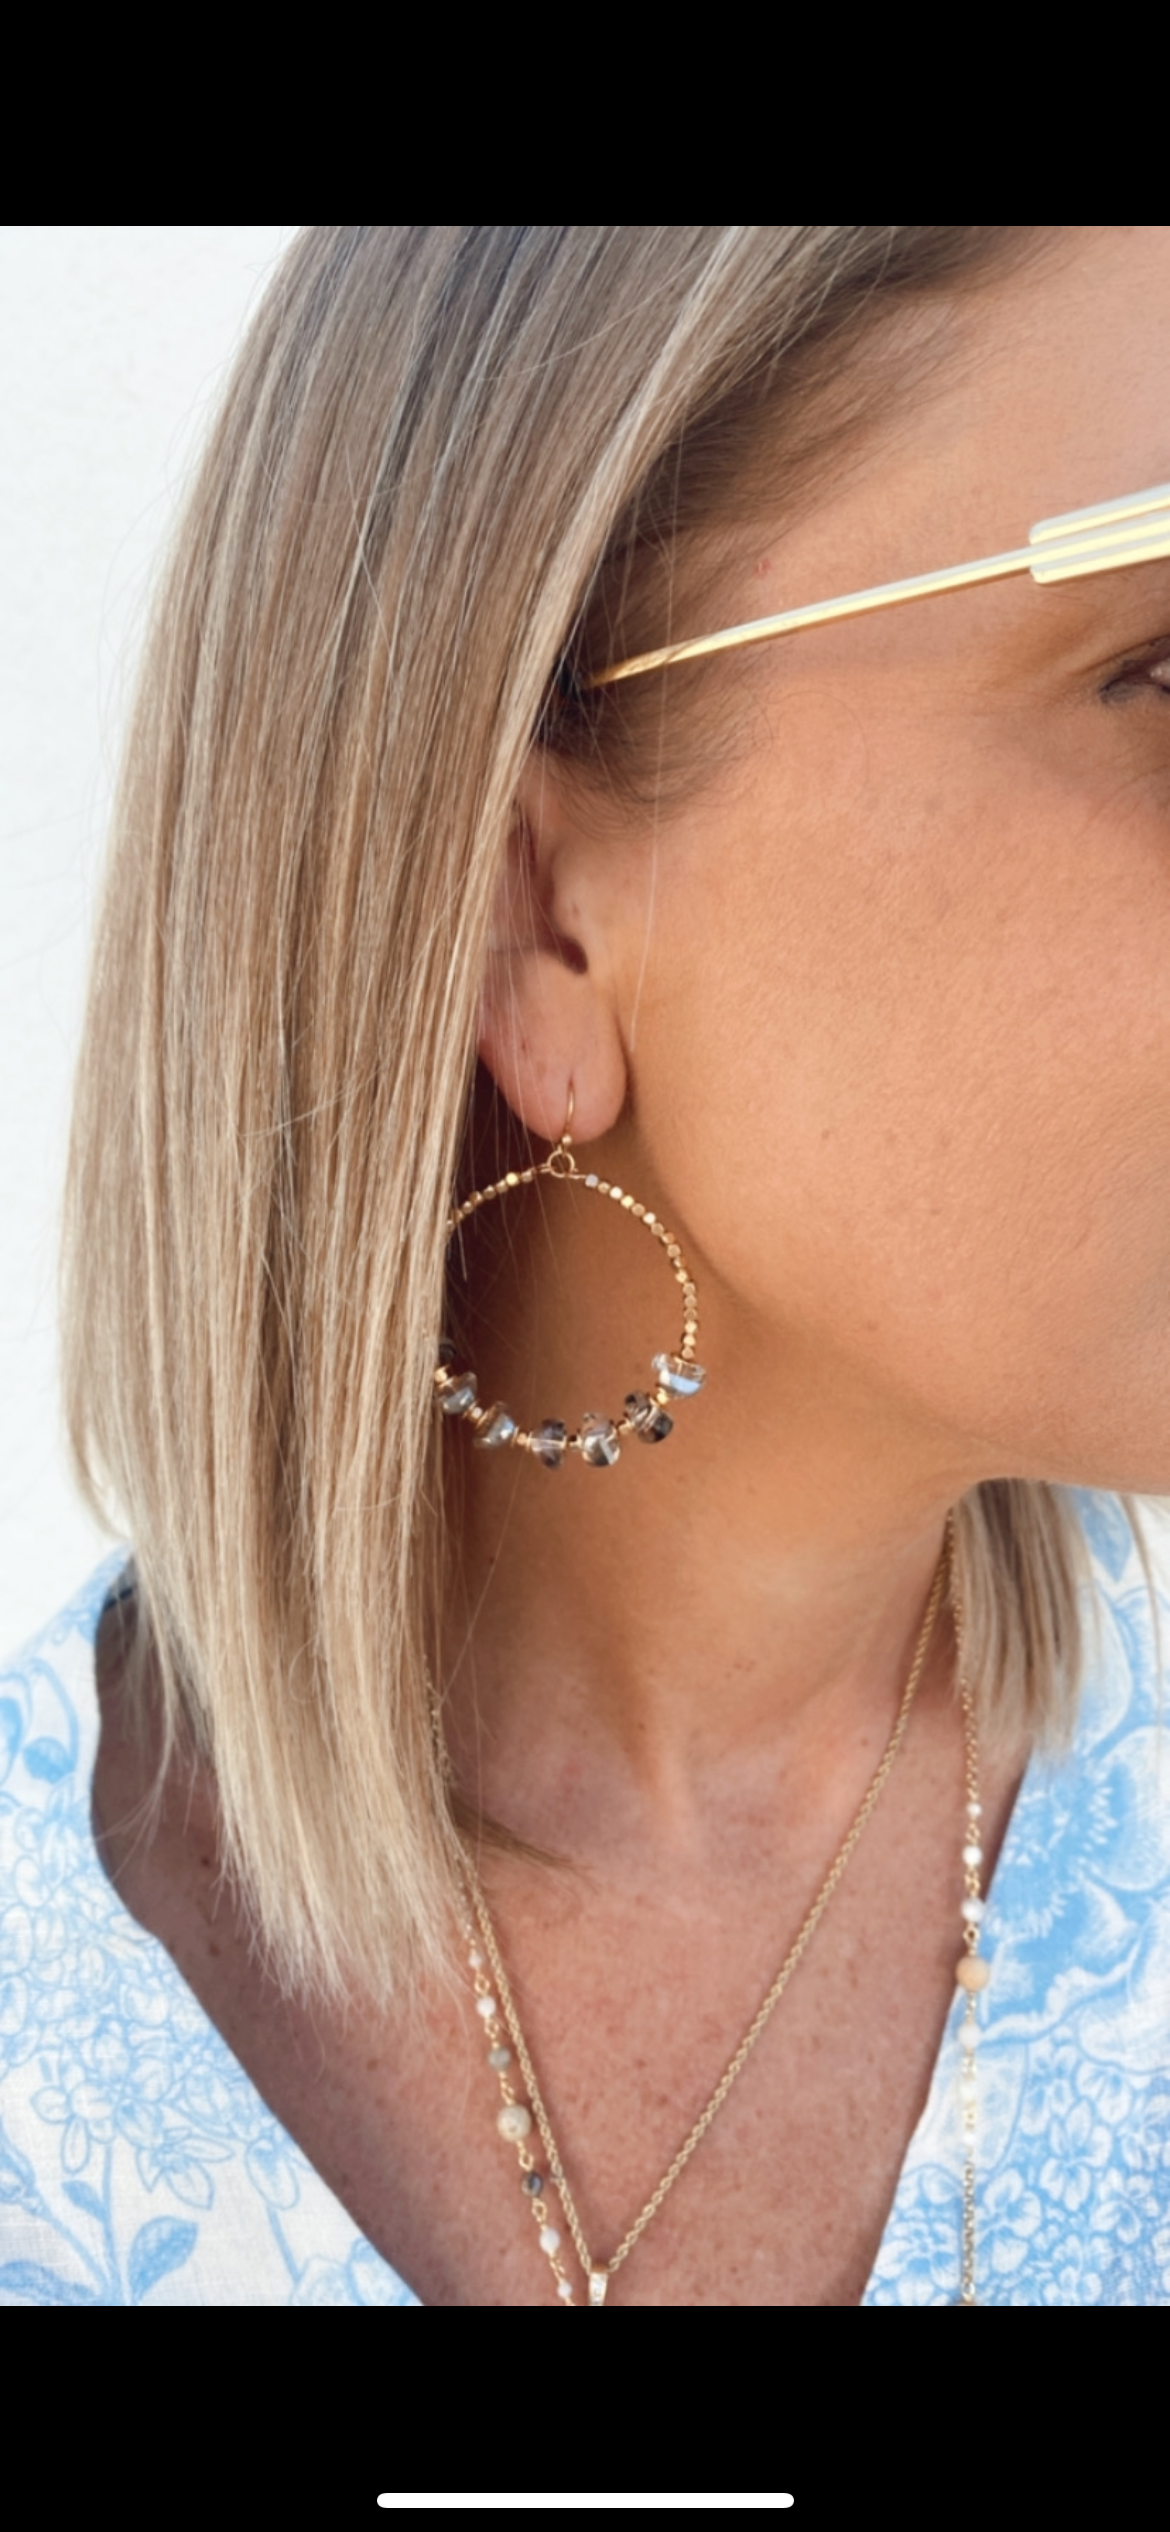 OWC Jewelry- Elsa earrings